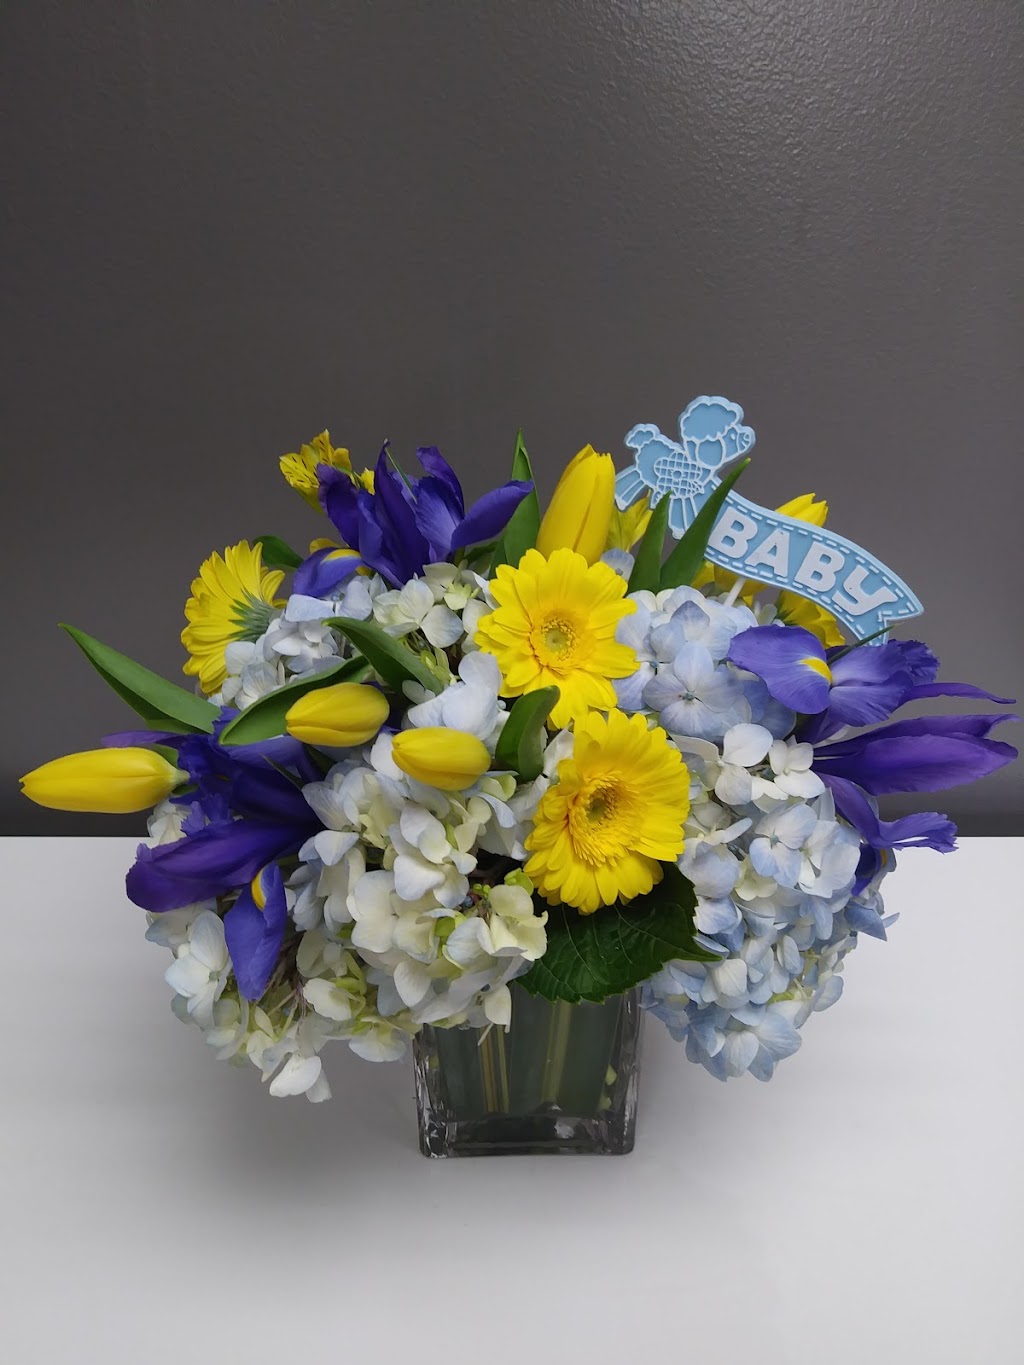 Broad River Flowers By Studio 9 | 126 New Canaan Ave, Norwalk, CT 06850 | Phone: (203) 354-3158